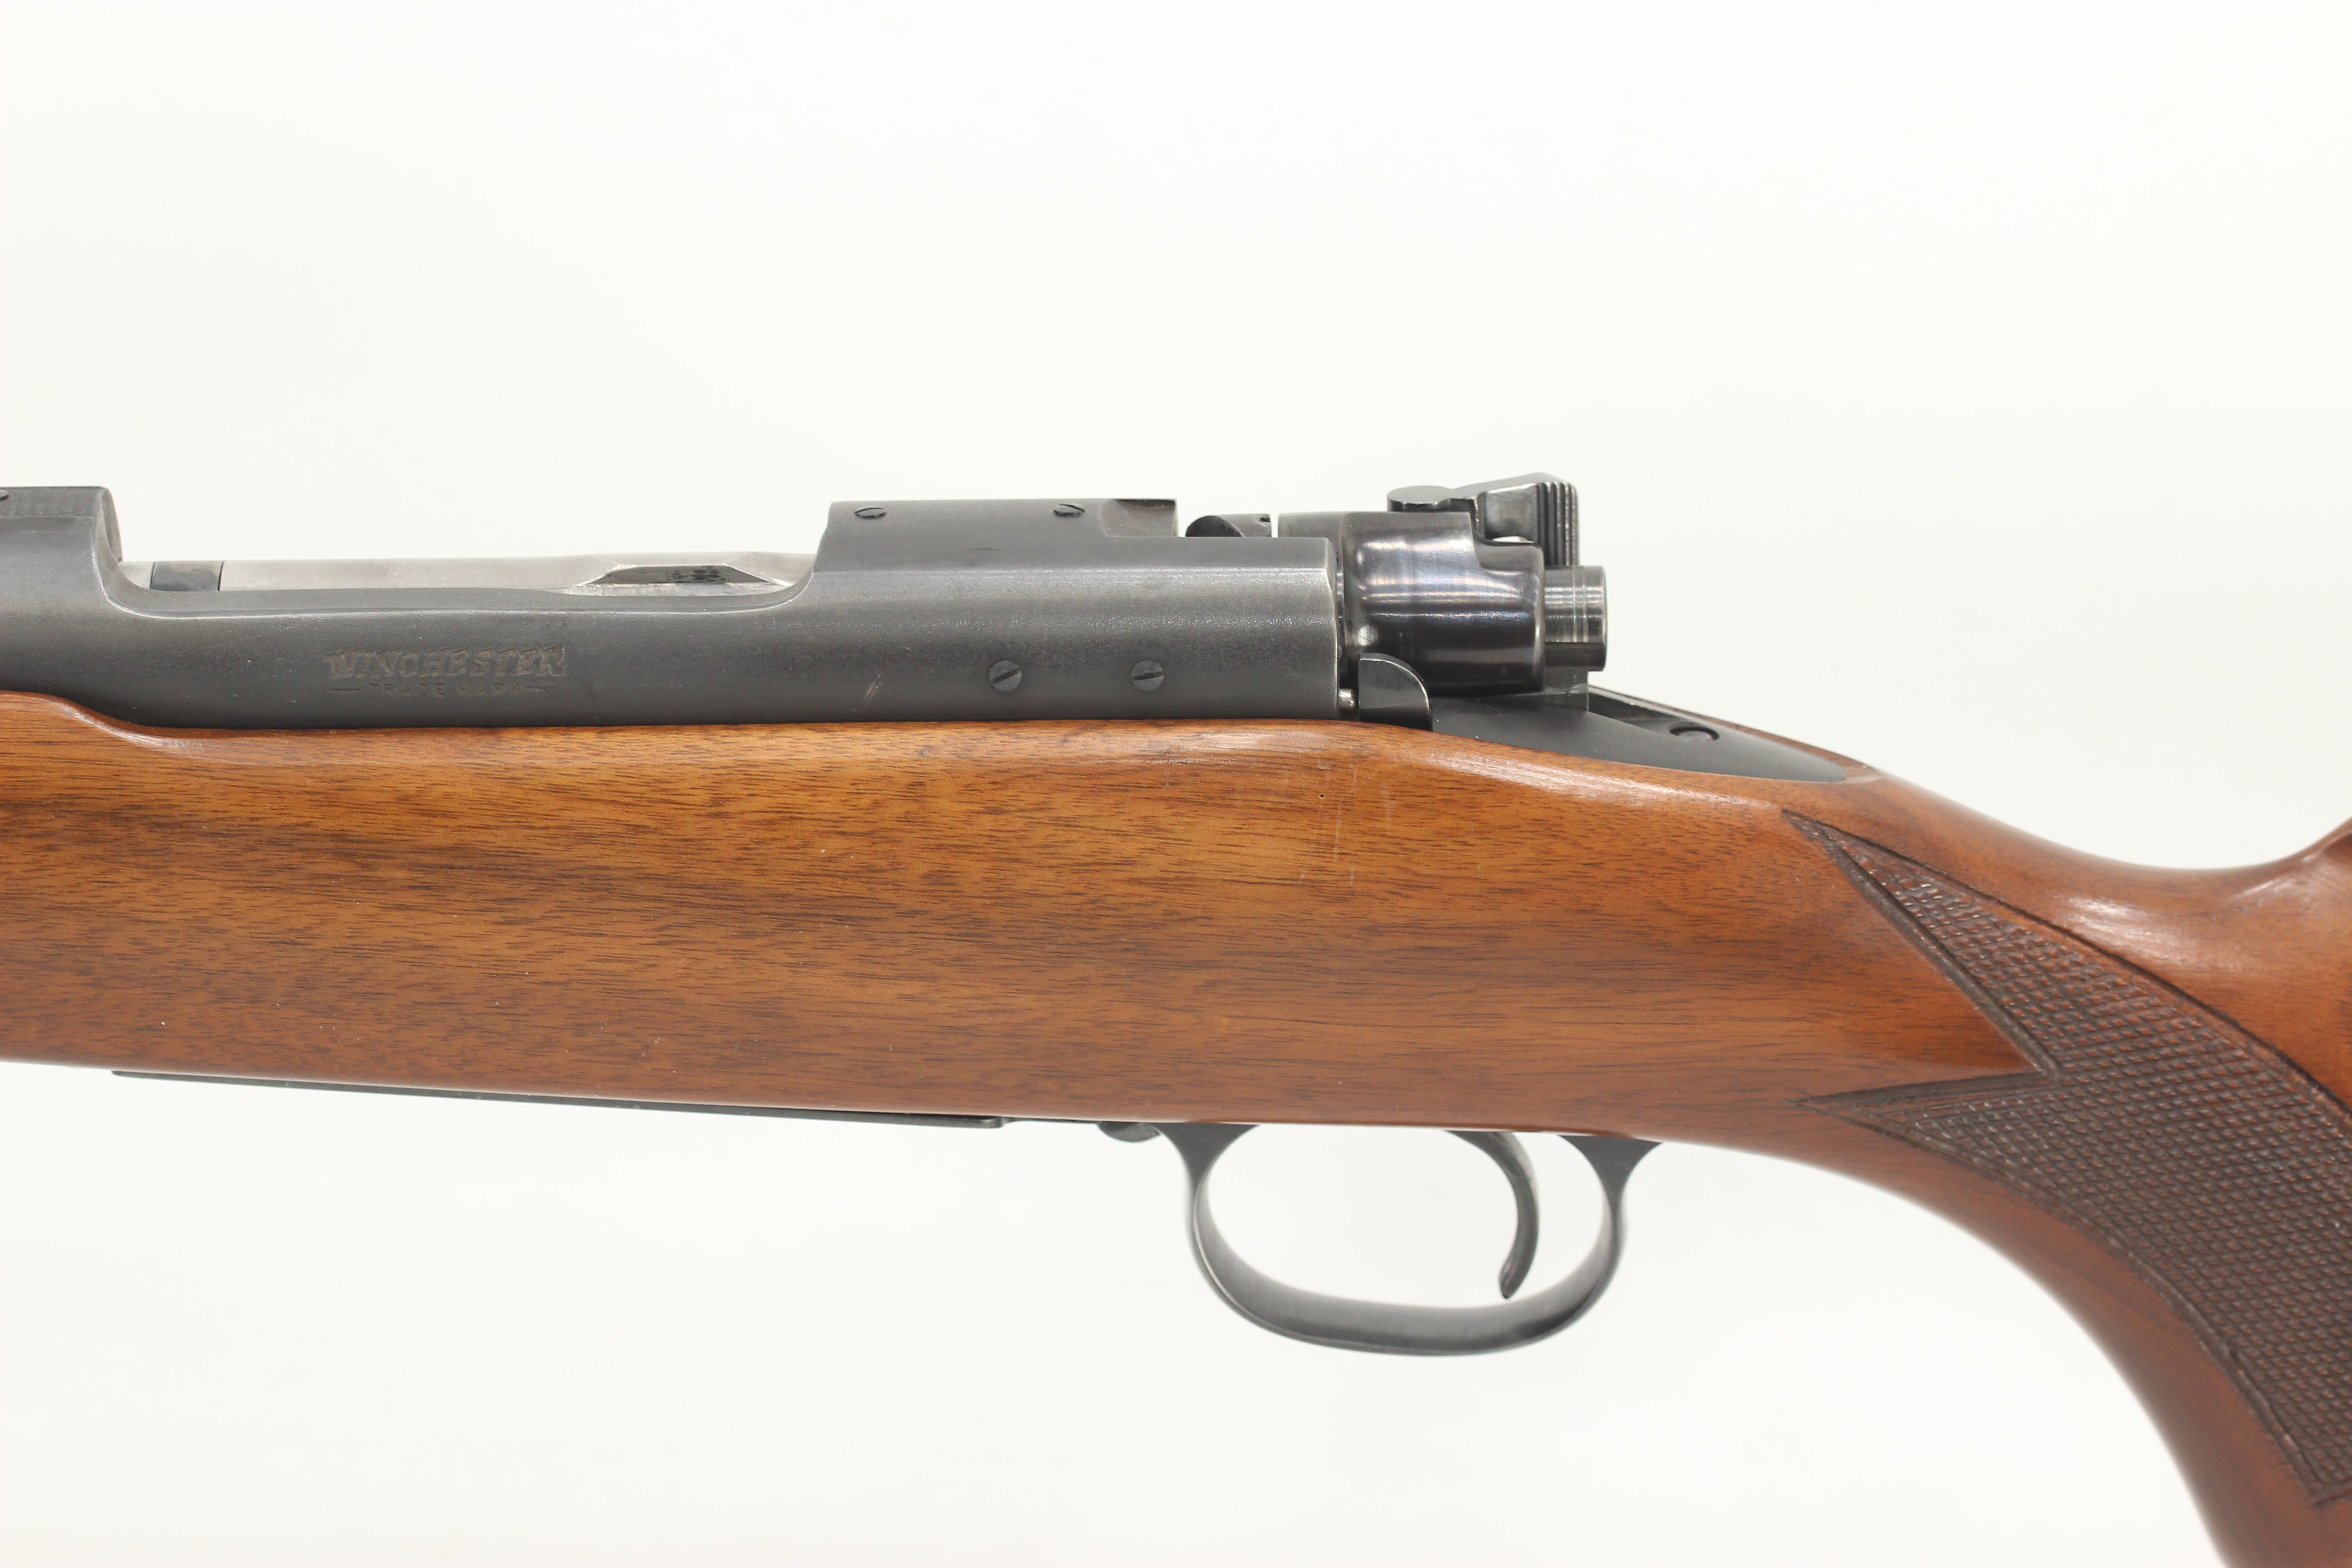 .270 Win. Standard Rifle - 1961